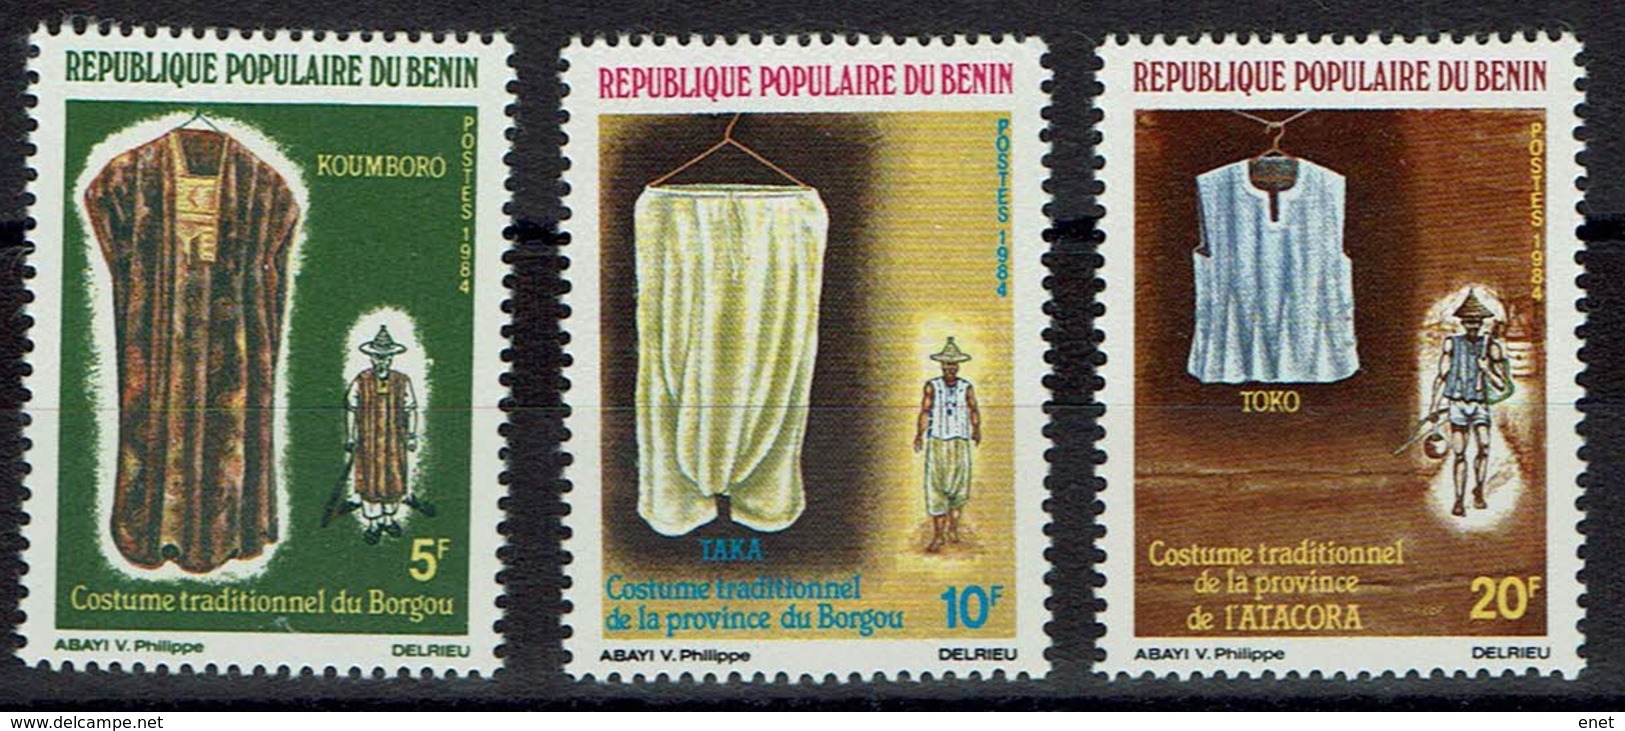 Benin 1984 - Trachten  Folk Costume - MiNr 353-355 - Kostüme